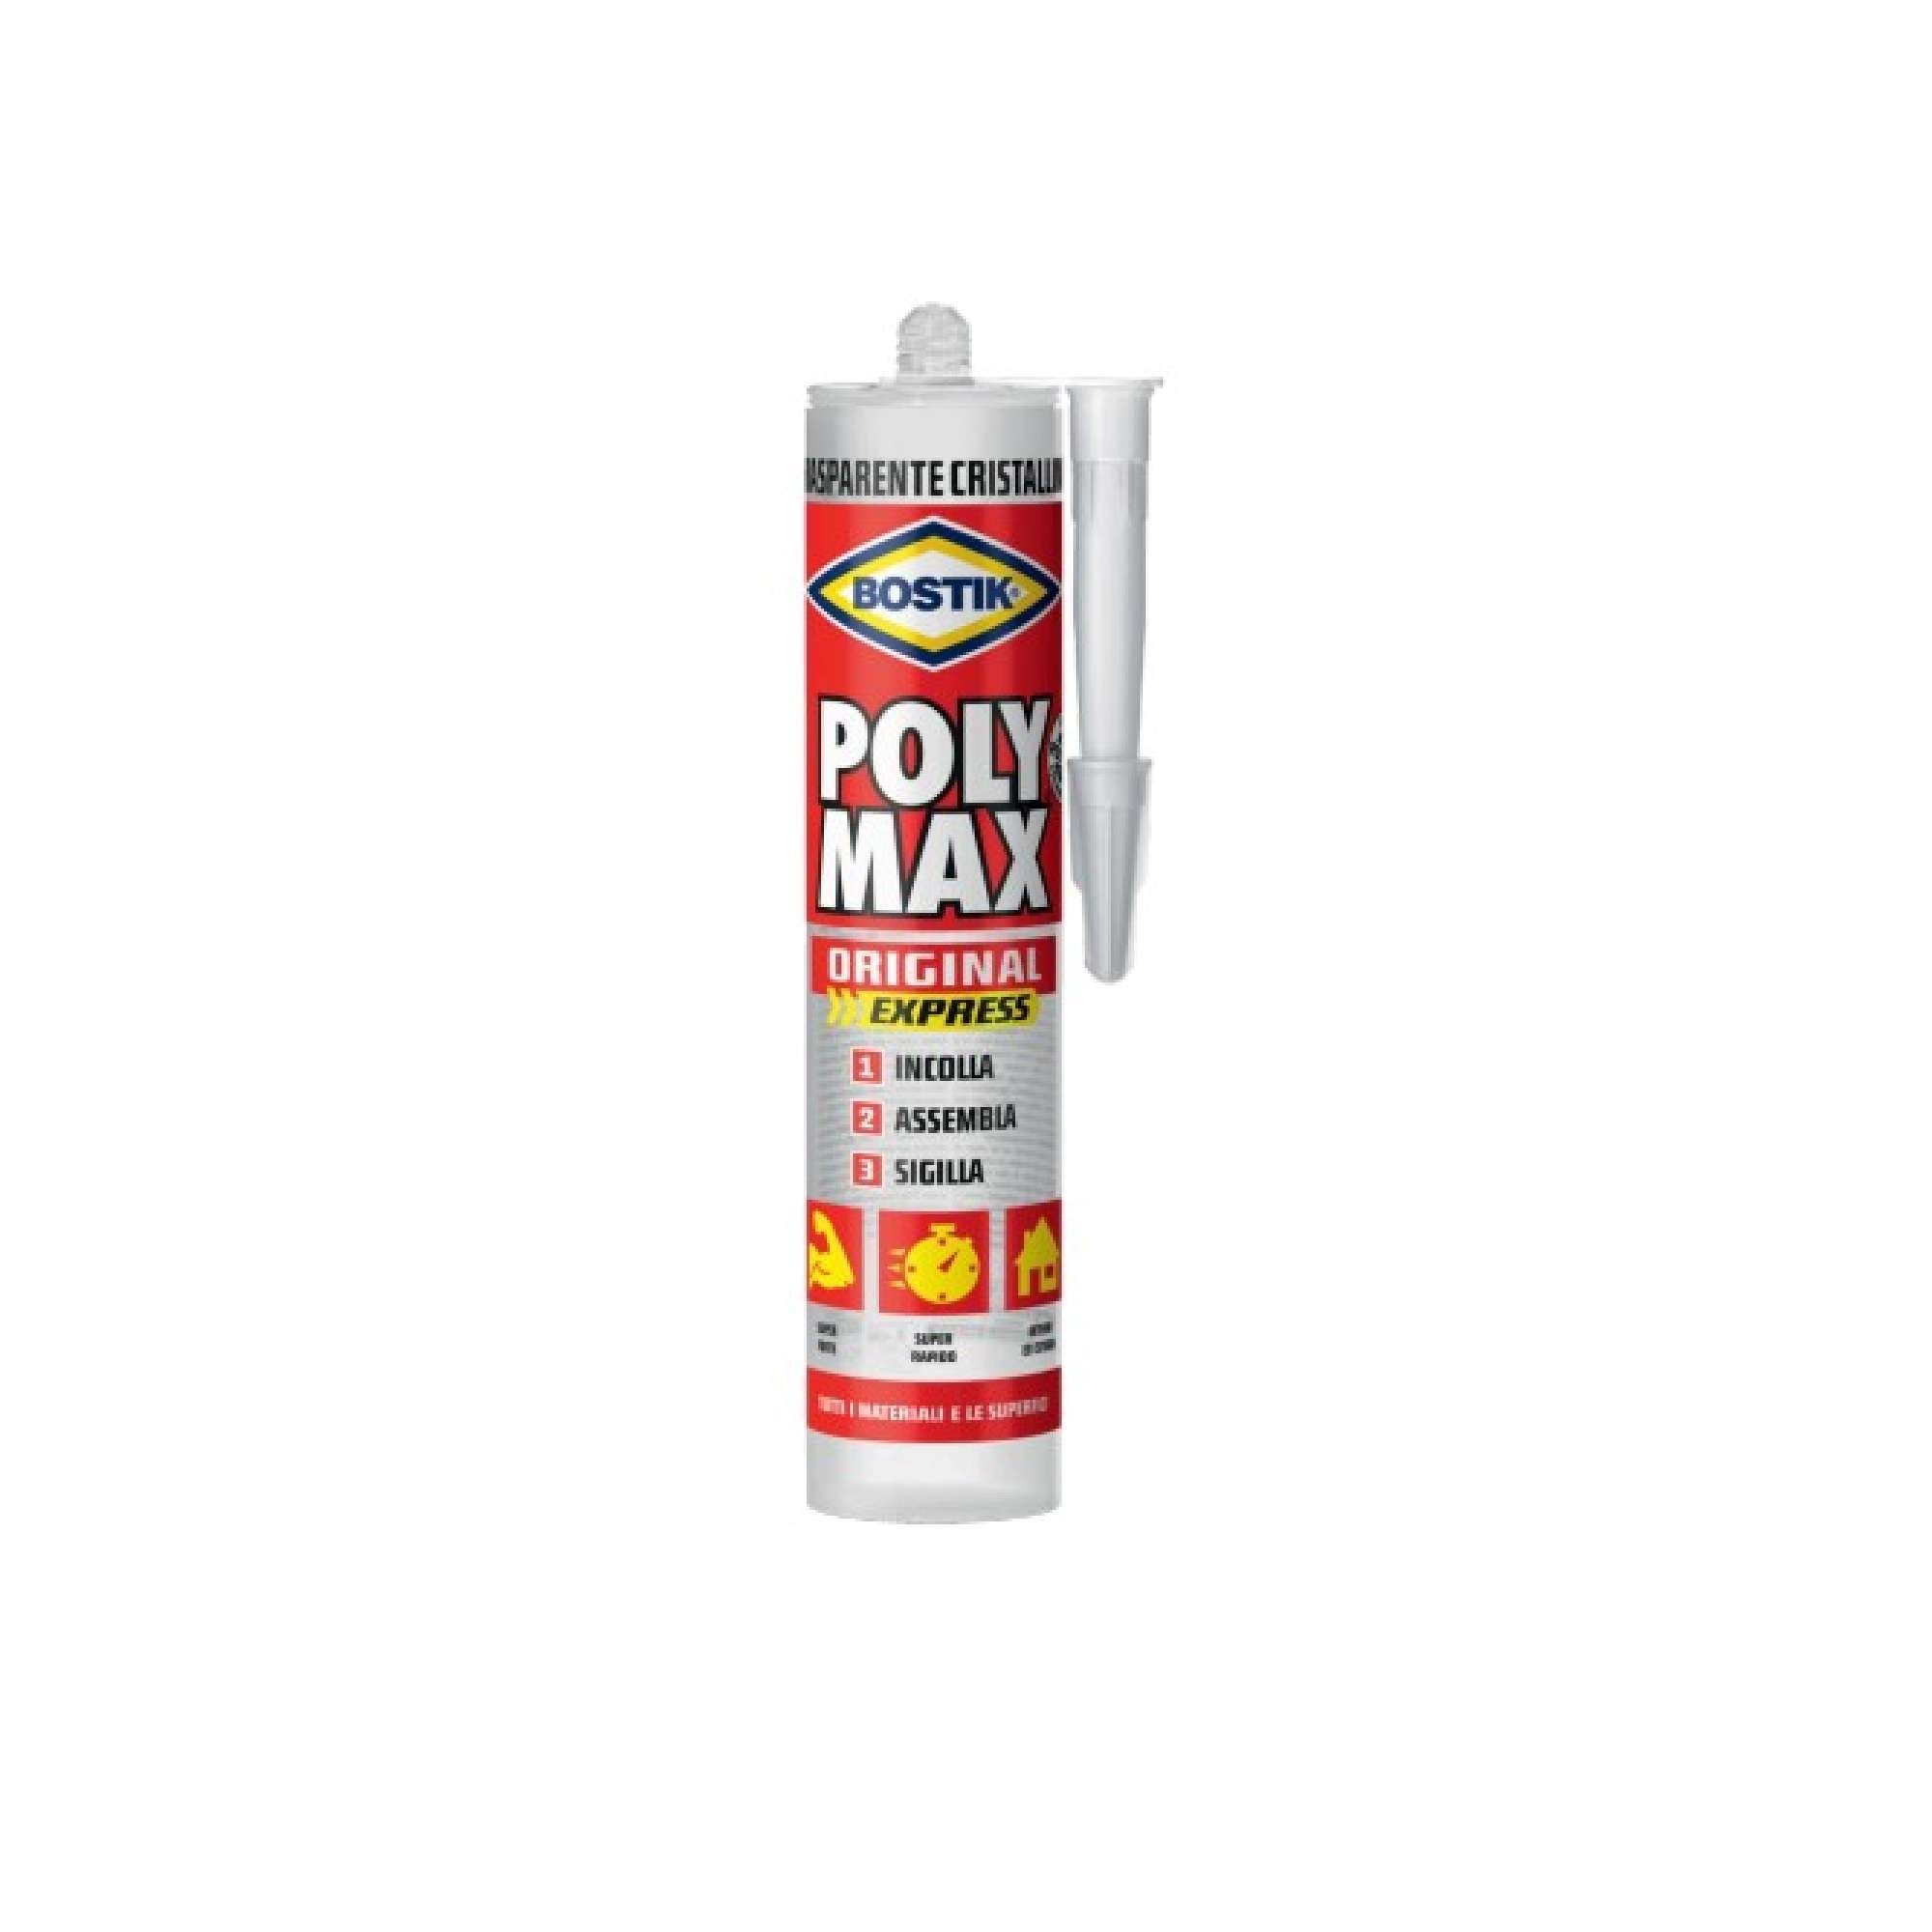 Adhesive Sealant. Polymax Cristal - UHU Bostik 6308187